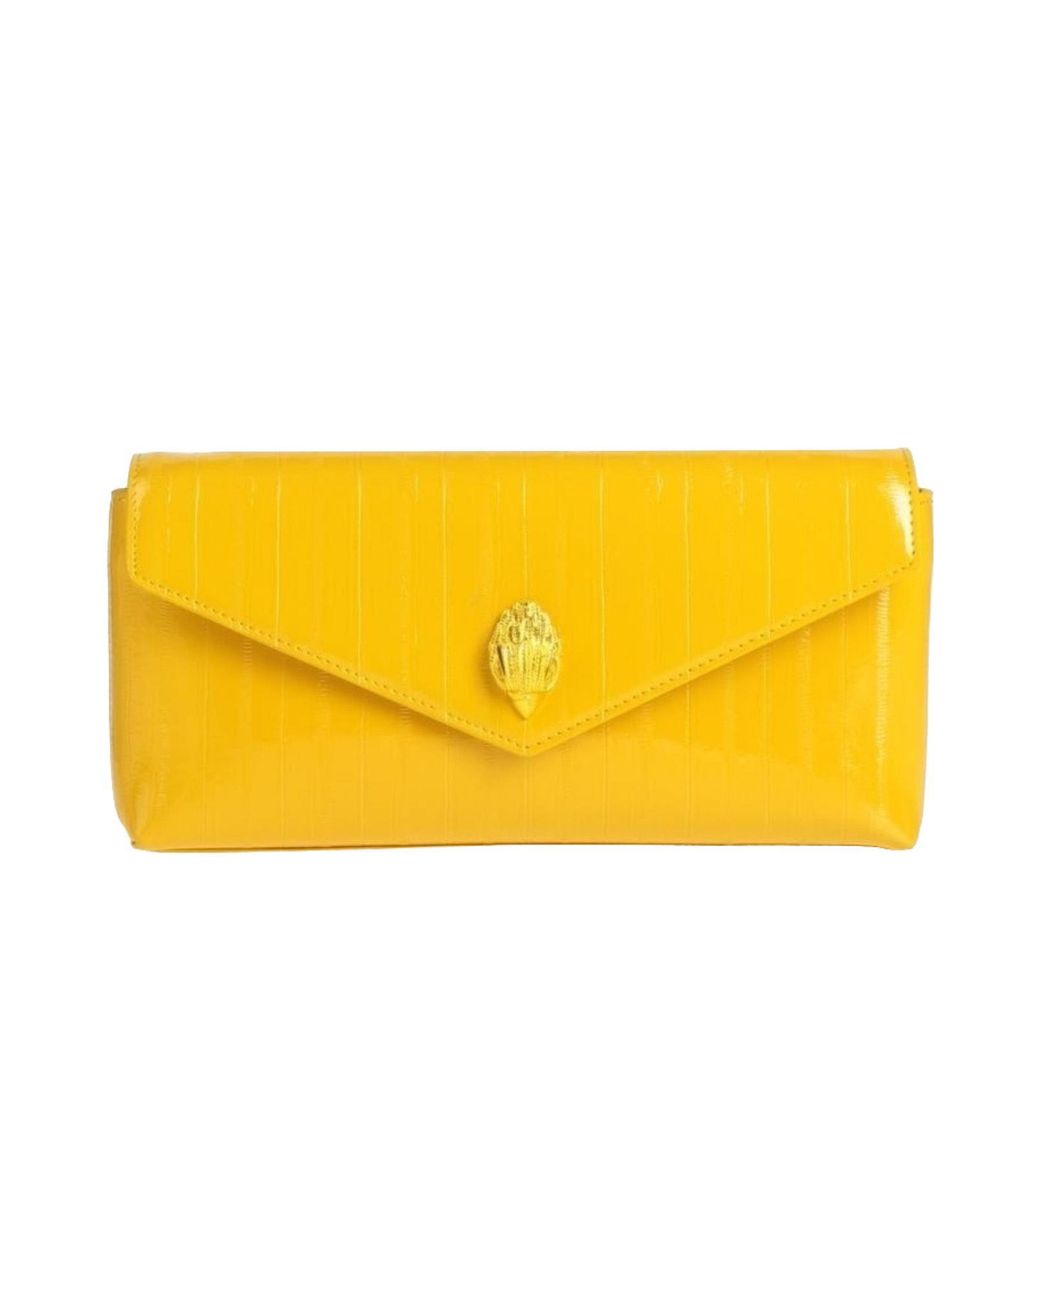 Kurt Geiger Handbag in Yellow | Lyst